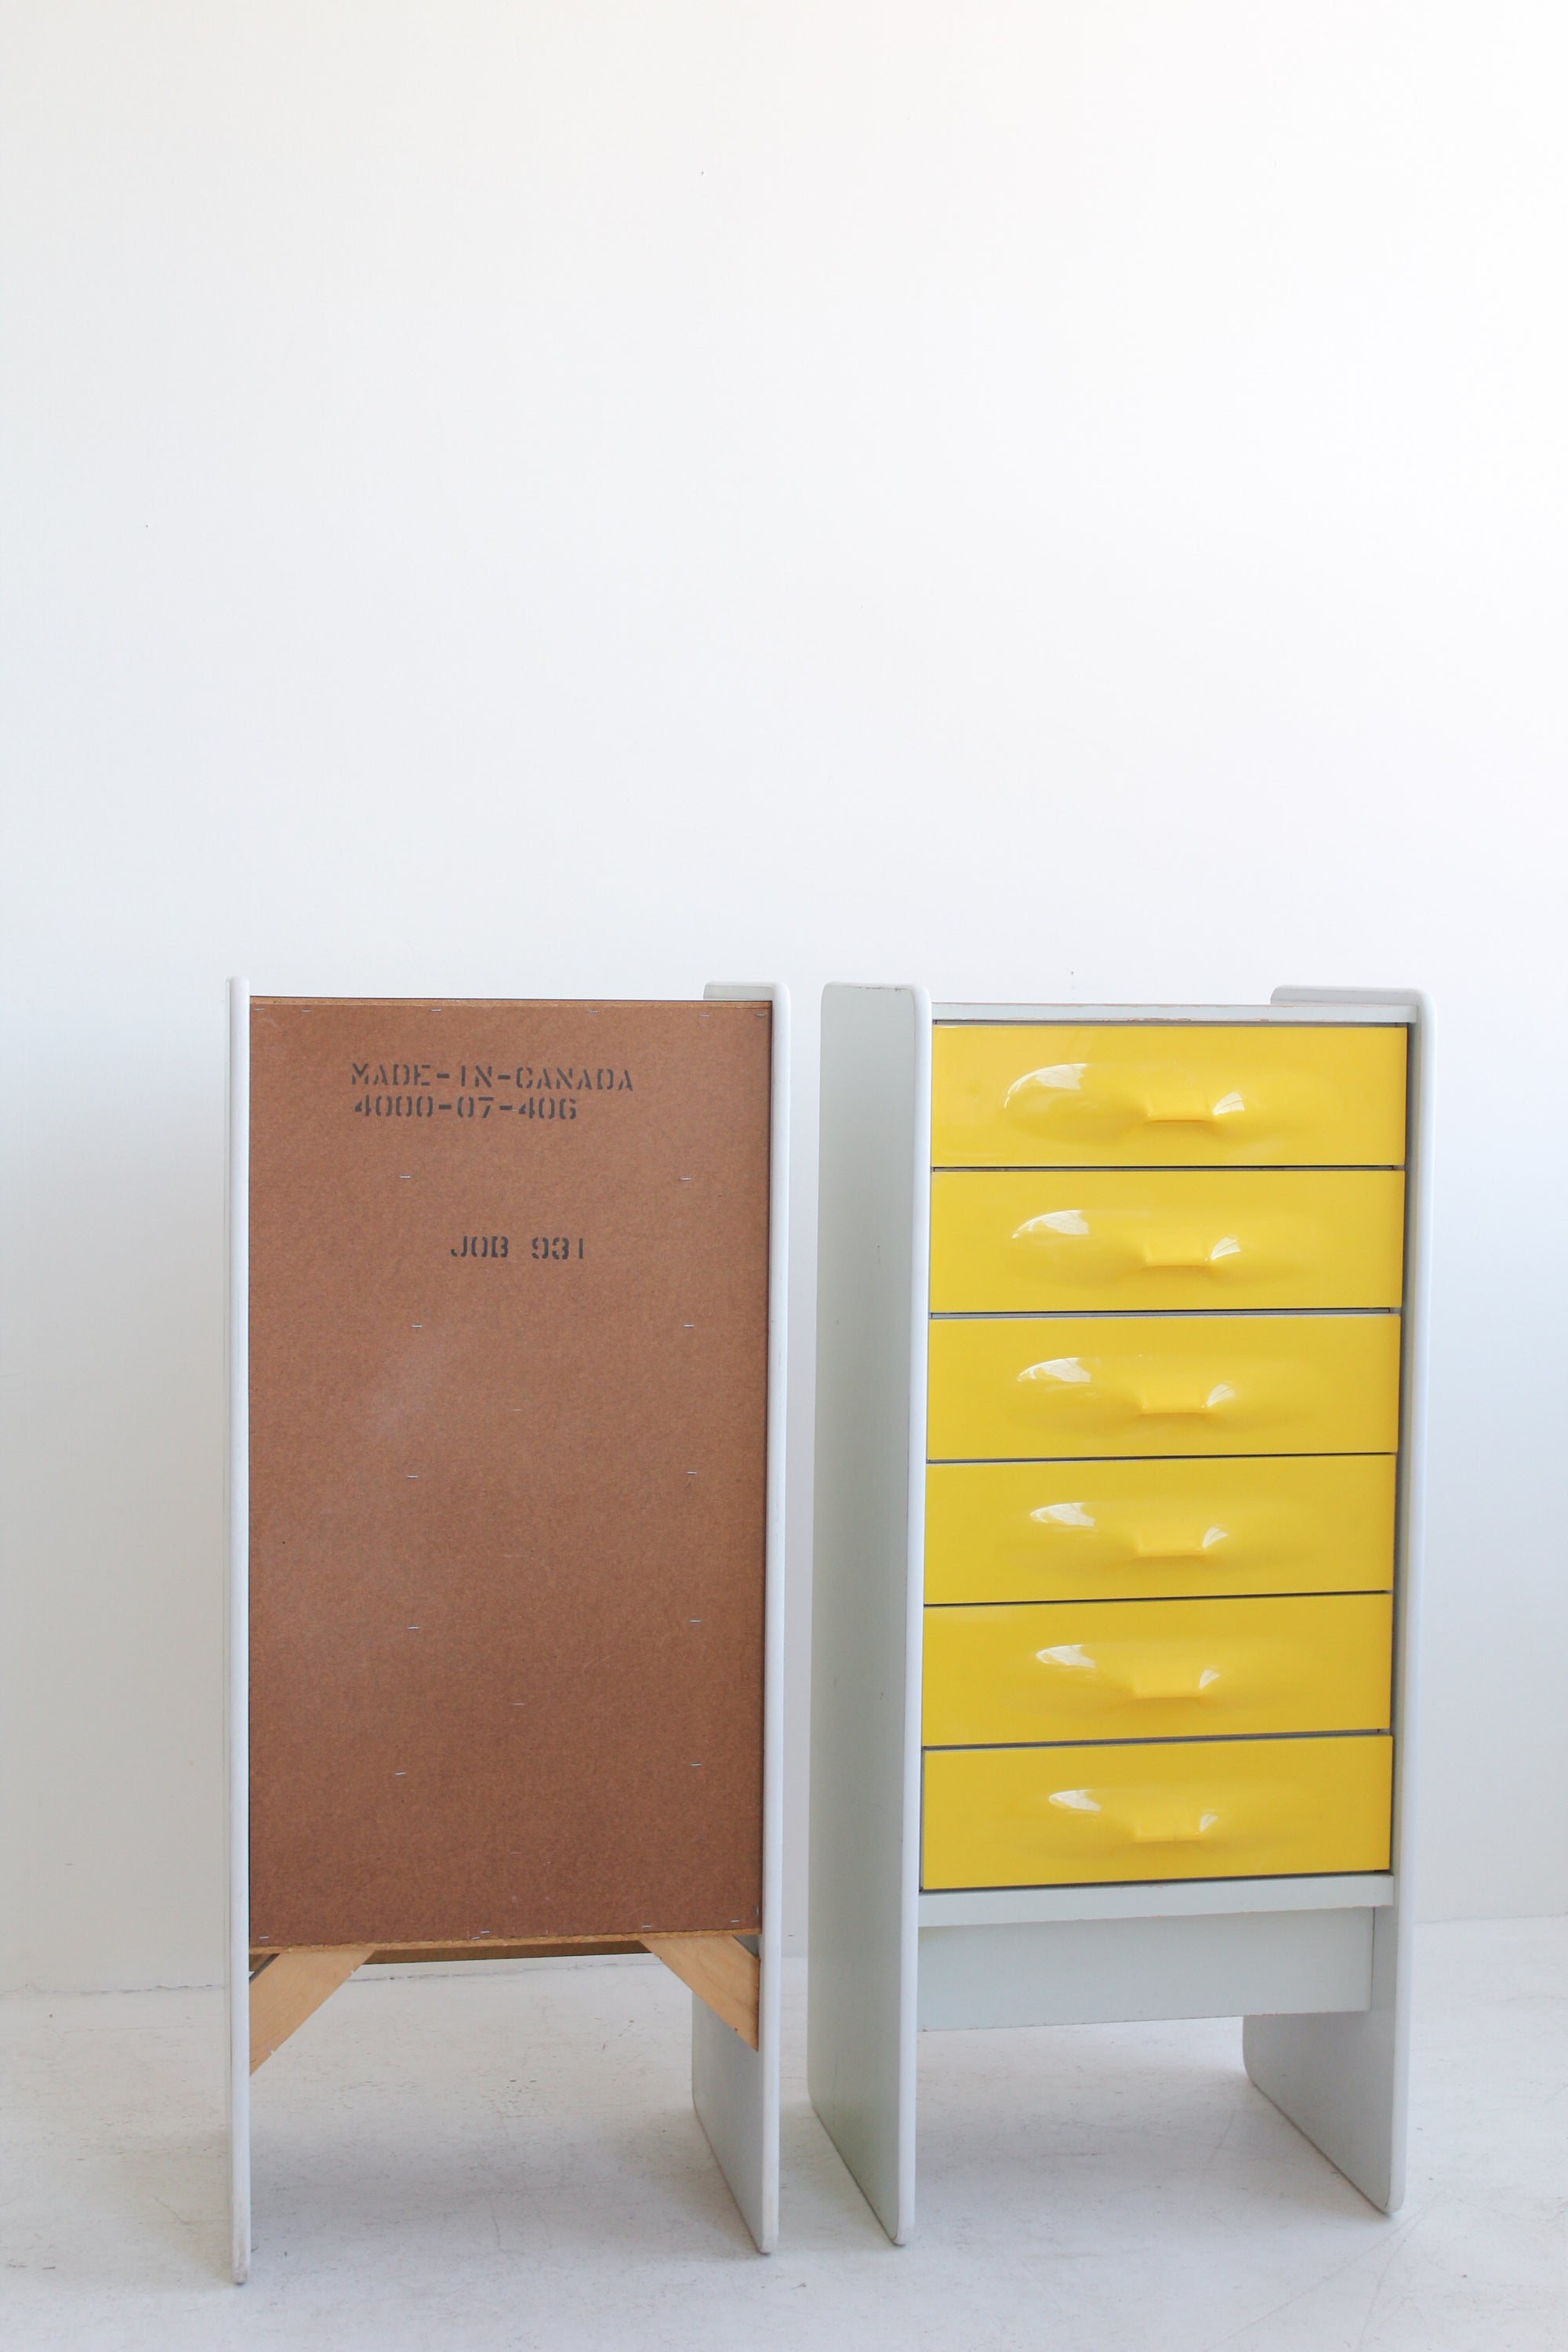 Yellow Highboy Dresser by Giovanni Maur for Treco